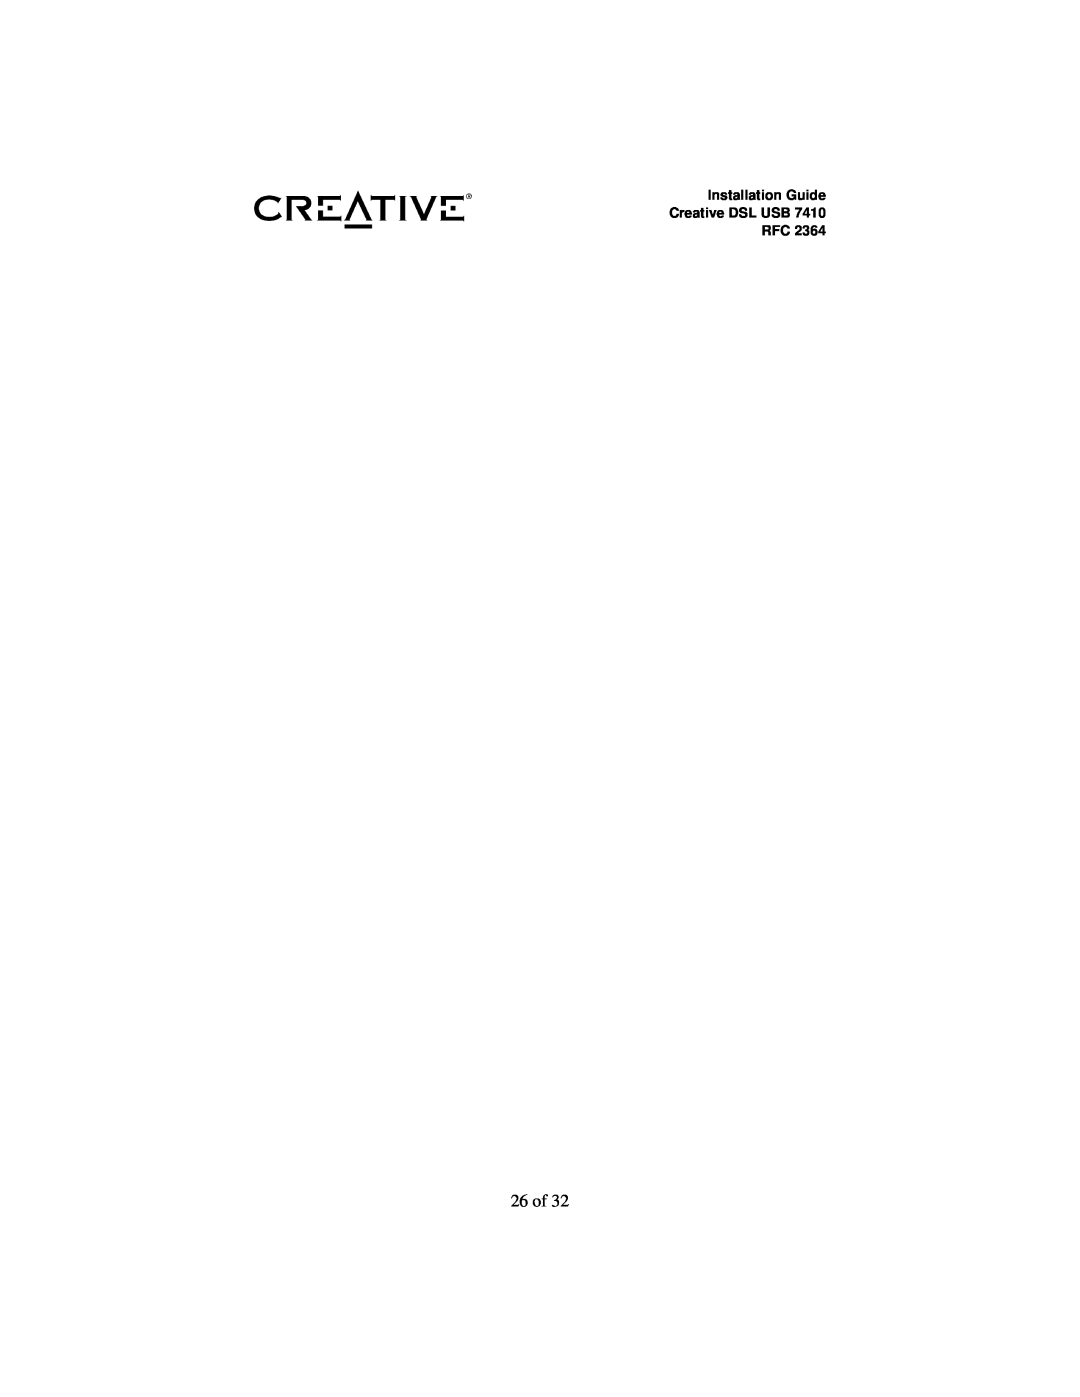 Creative RFC 2364 appendix 26 of, Installation Guide Creative DSL USB RFC 